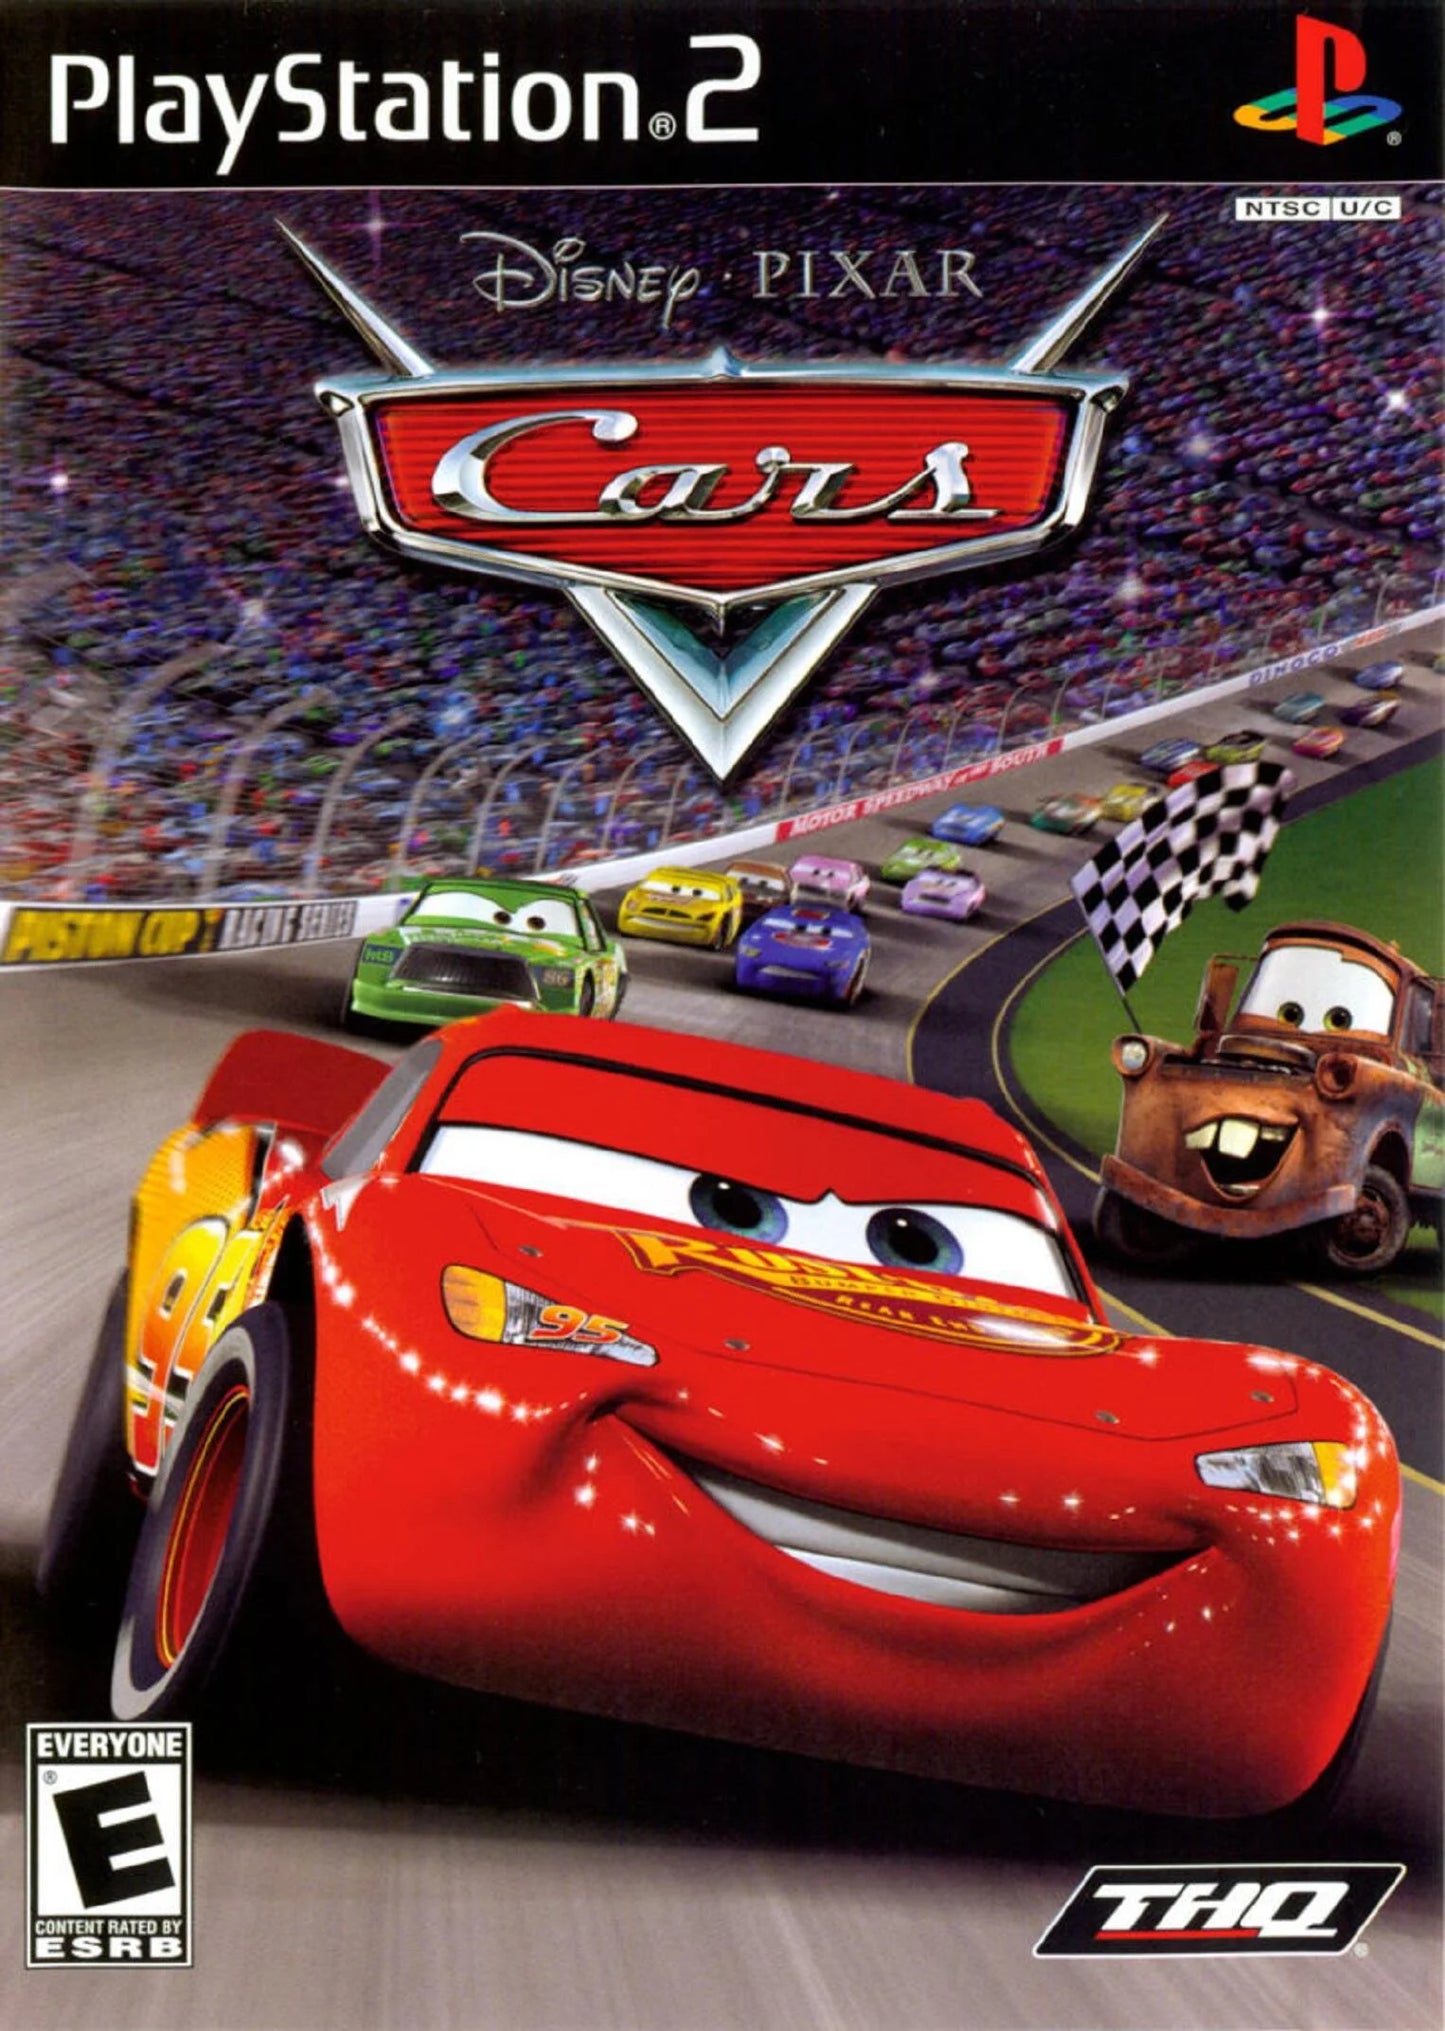 Playstation 2: Disney Pixar Cars